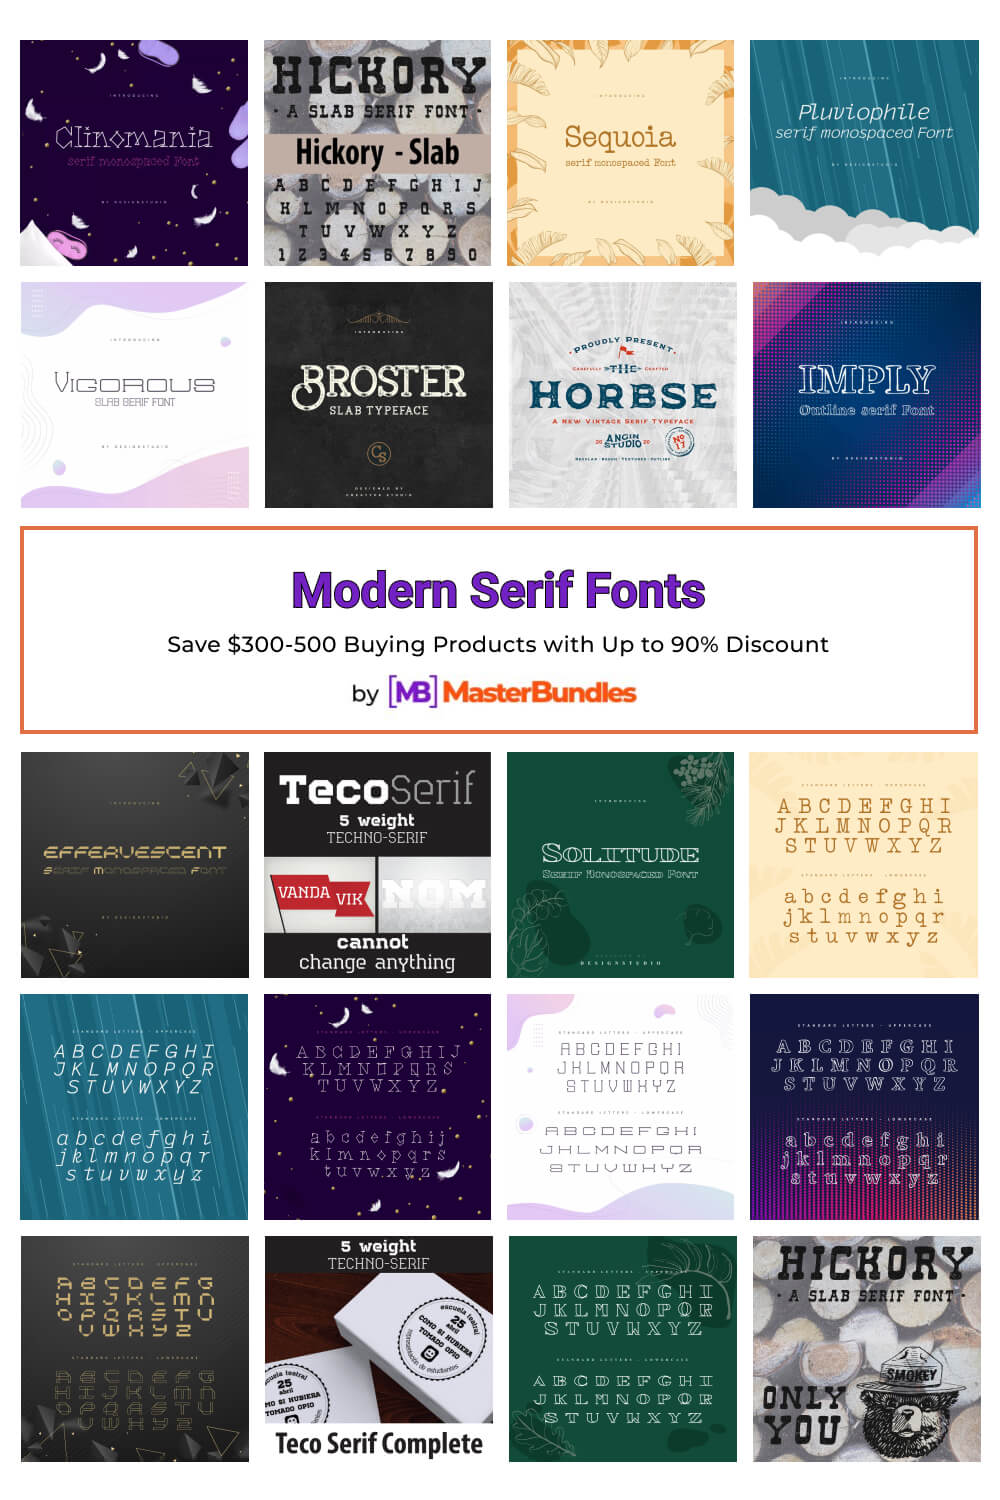 modern serif fonts pinterest image.